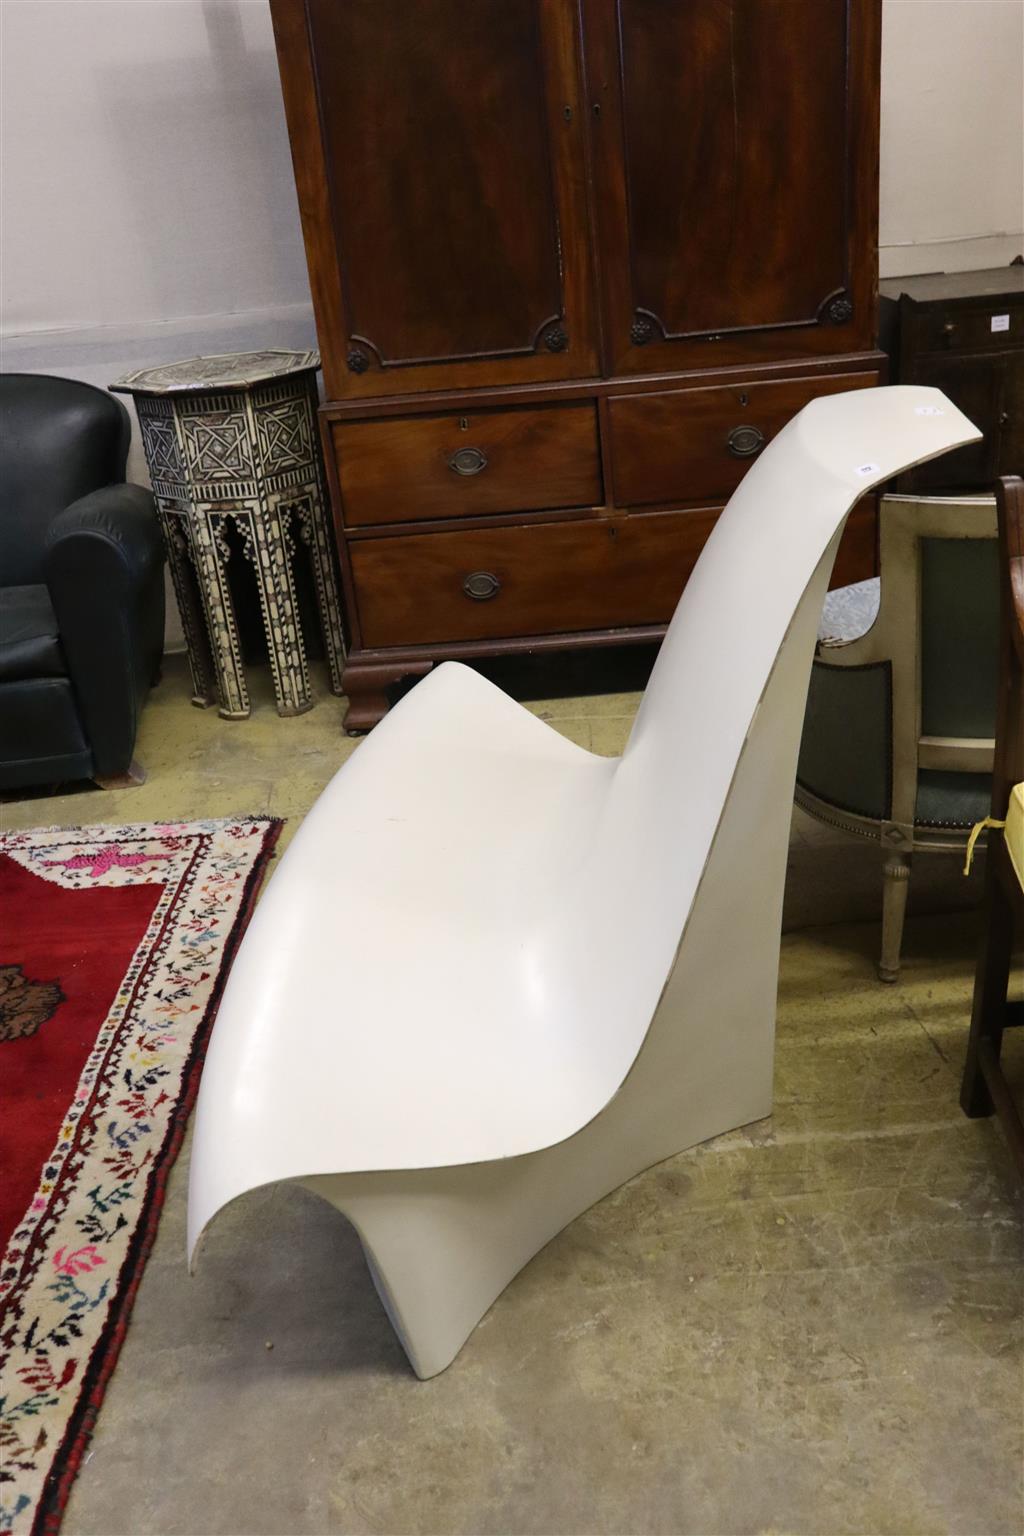 A 1960s white plastic chair